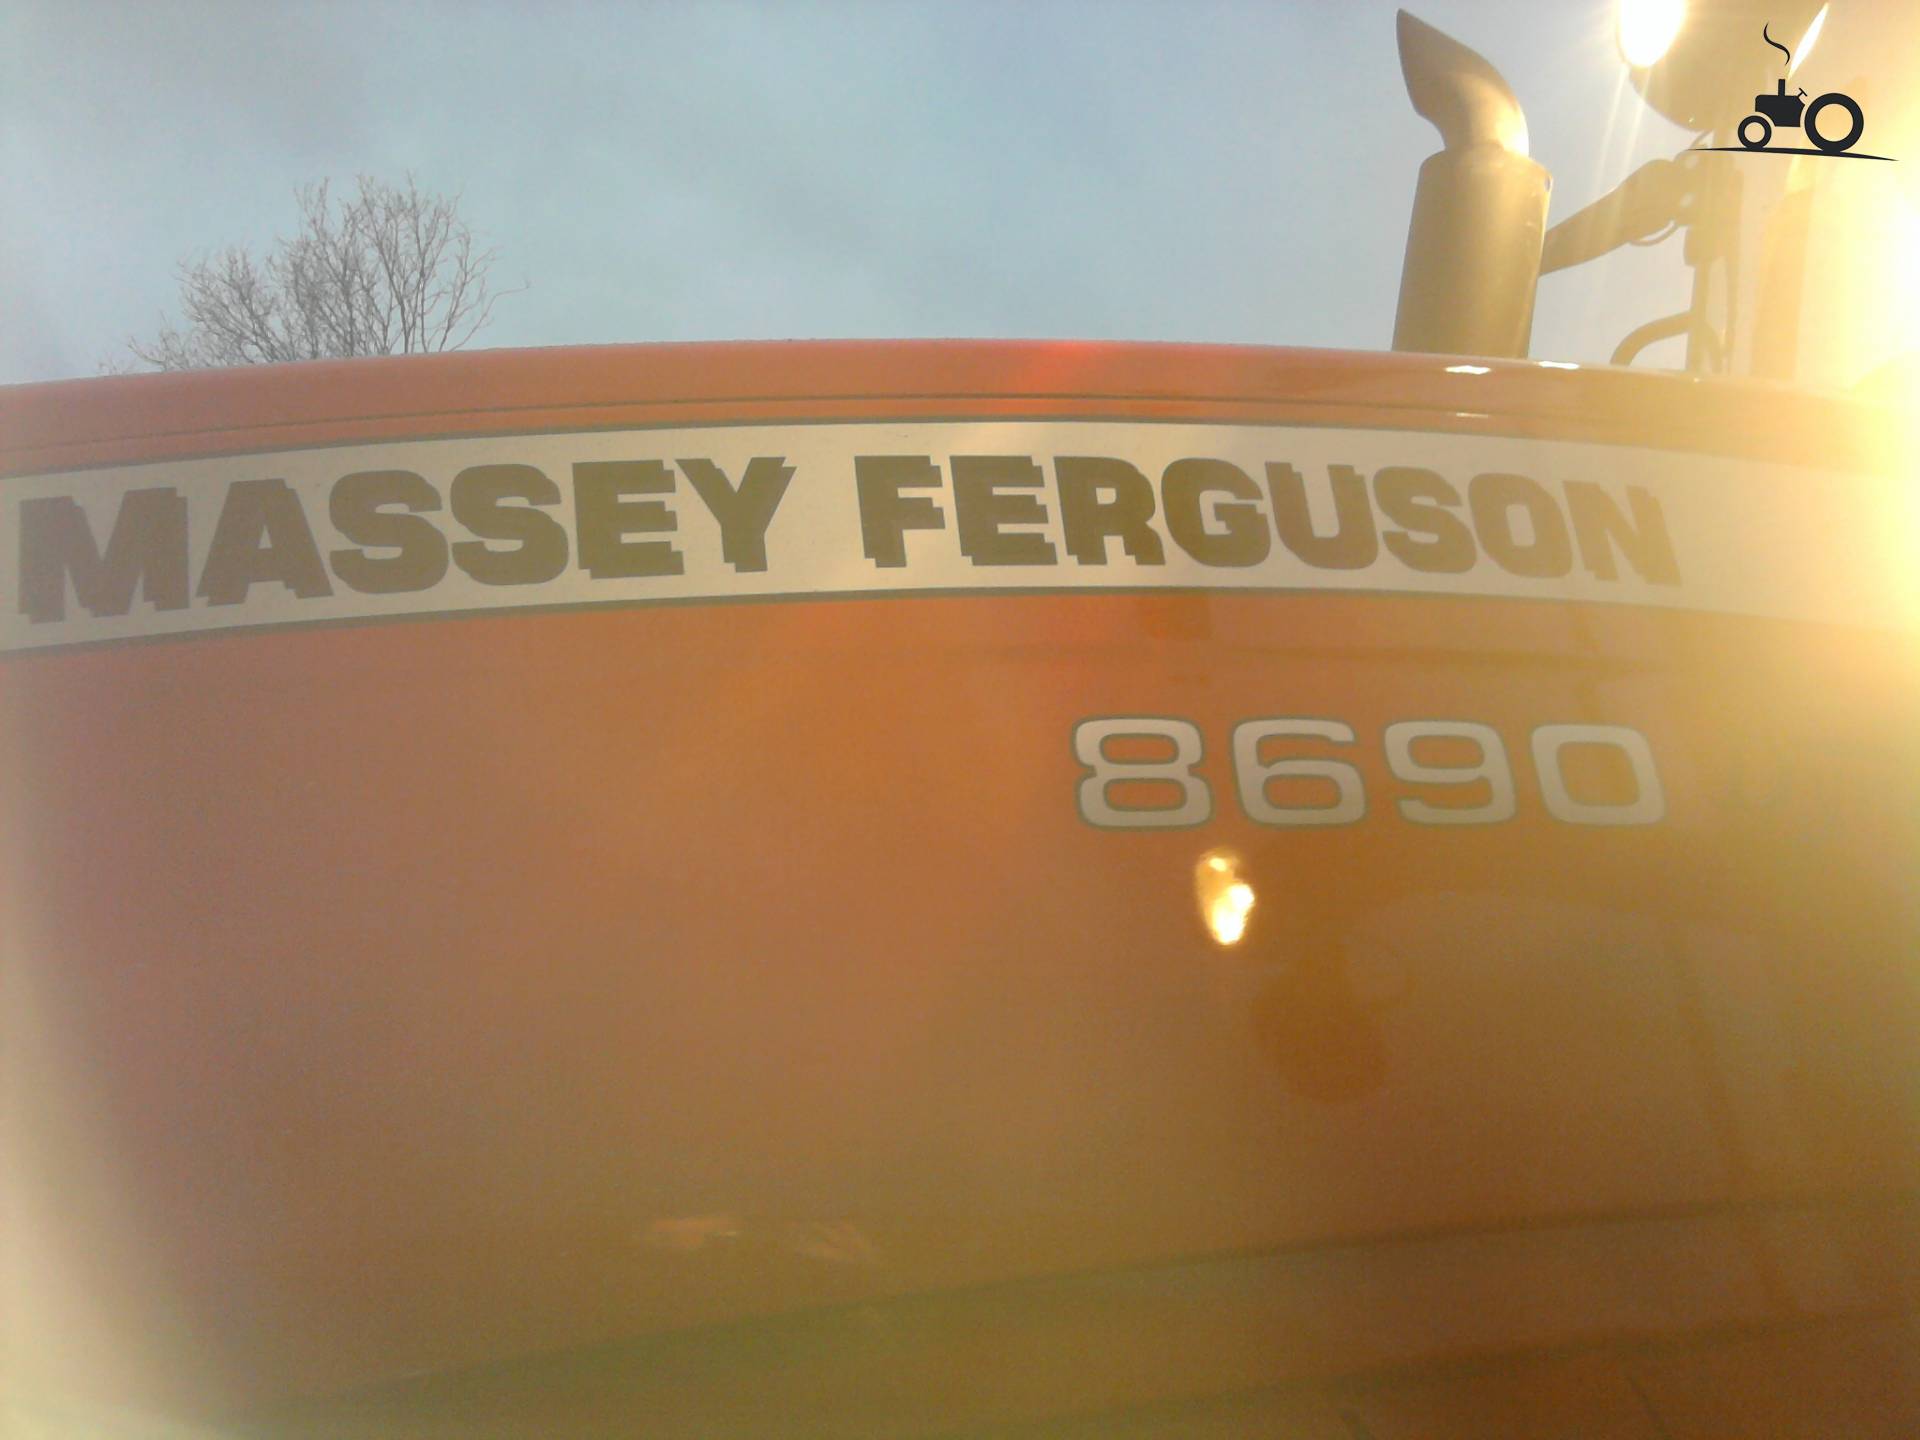 Massey Ferguson 8690